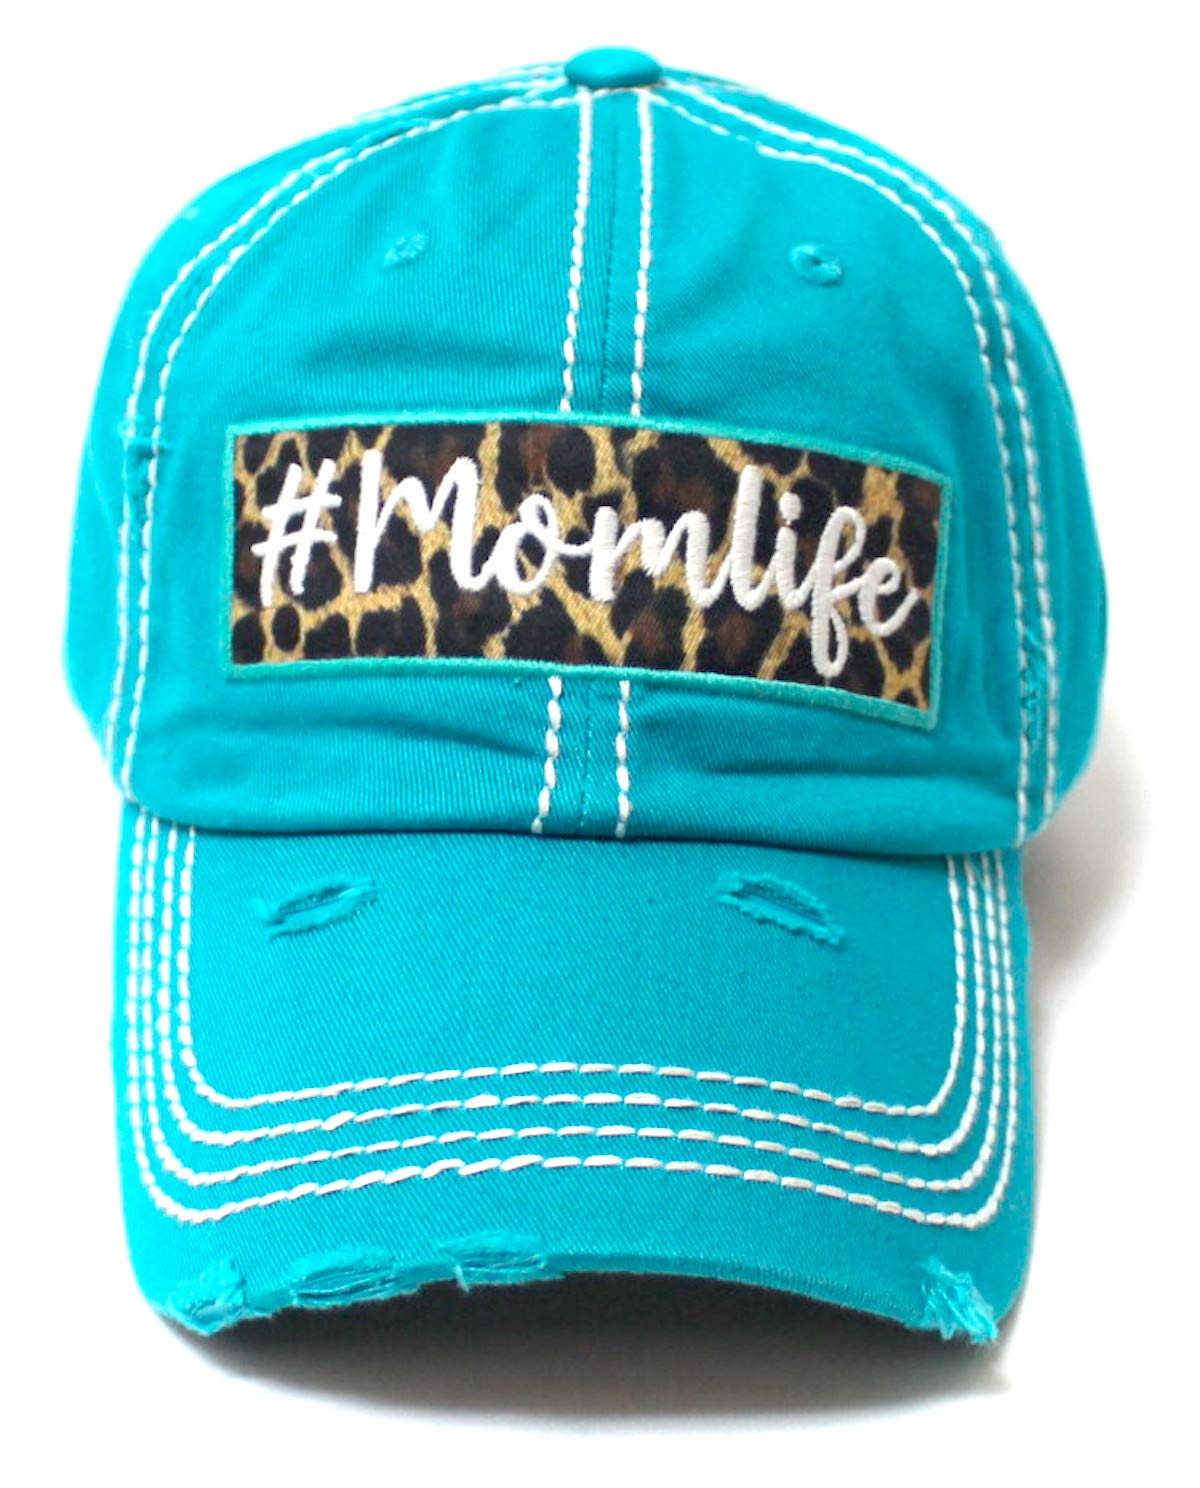 CAPS 'N VINTAGE Women's Distressed Cap #Momlife Leopard Print Patch Embroidery Monogram Hat, California Beach Blue - Caps 'N Vintage 